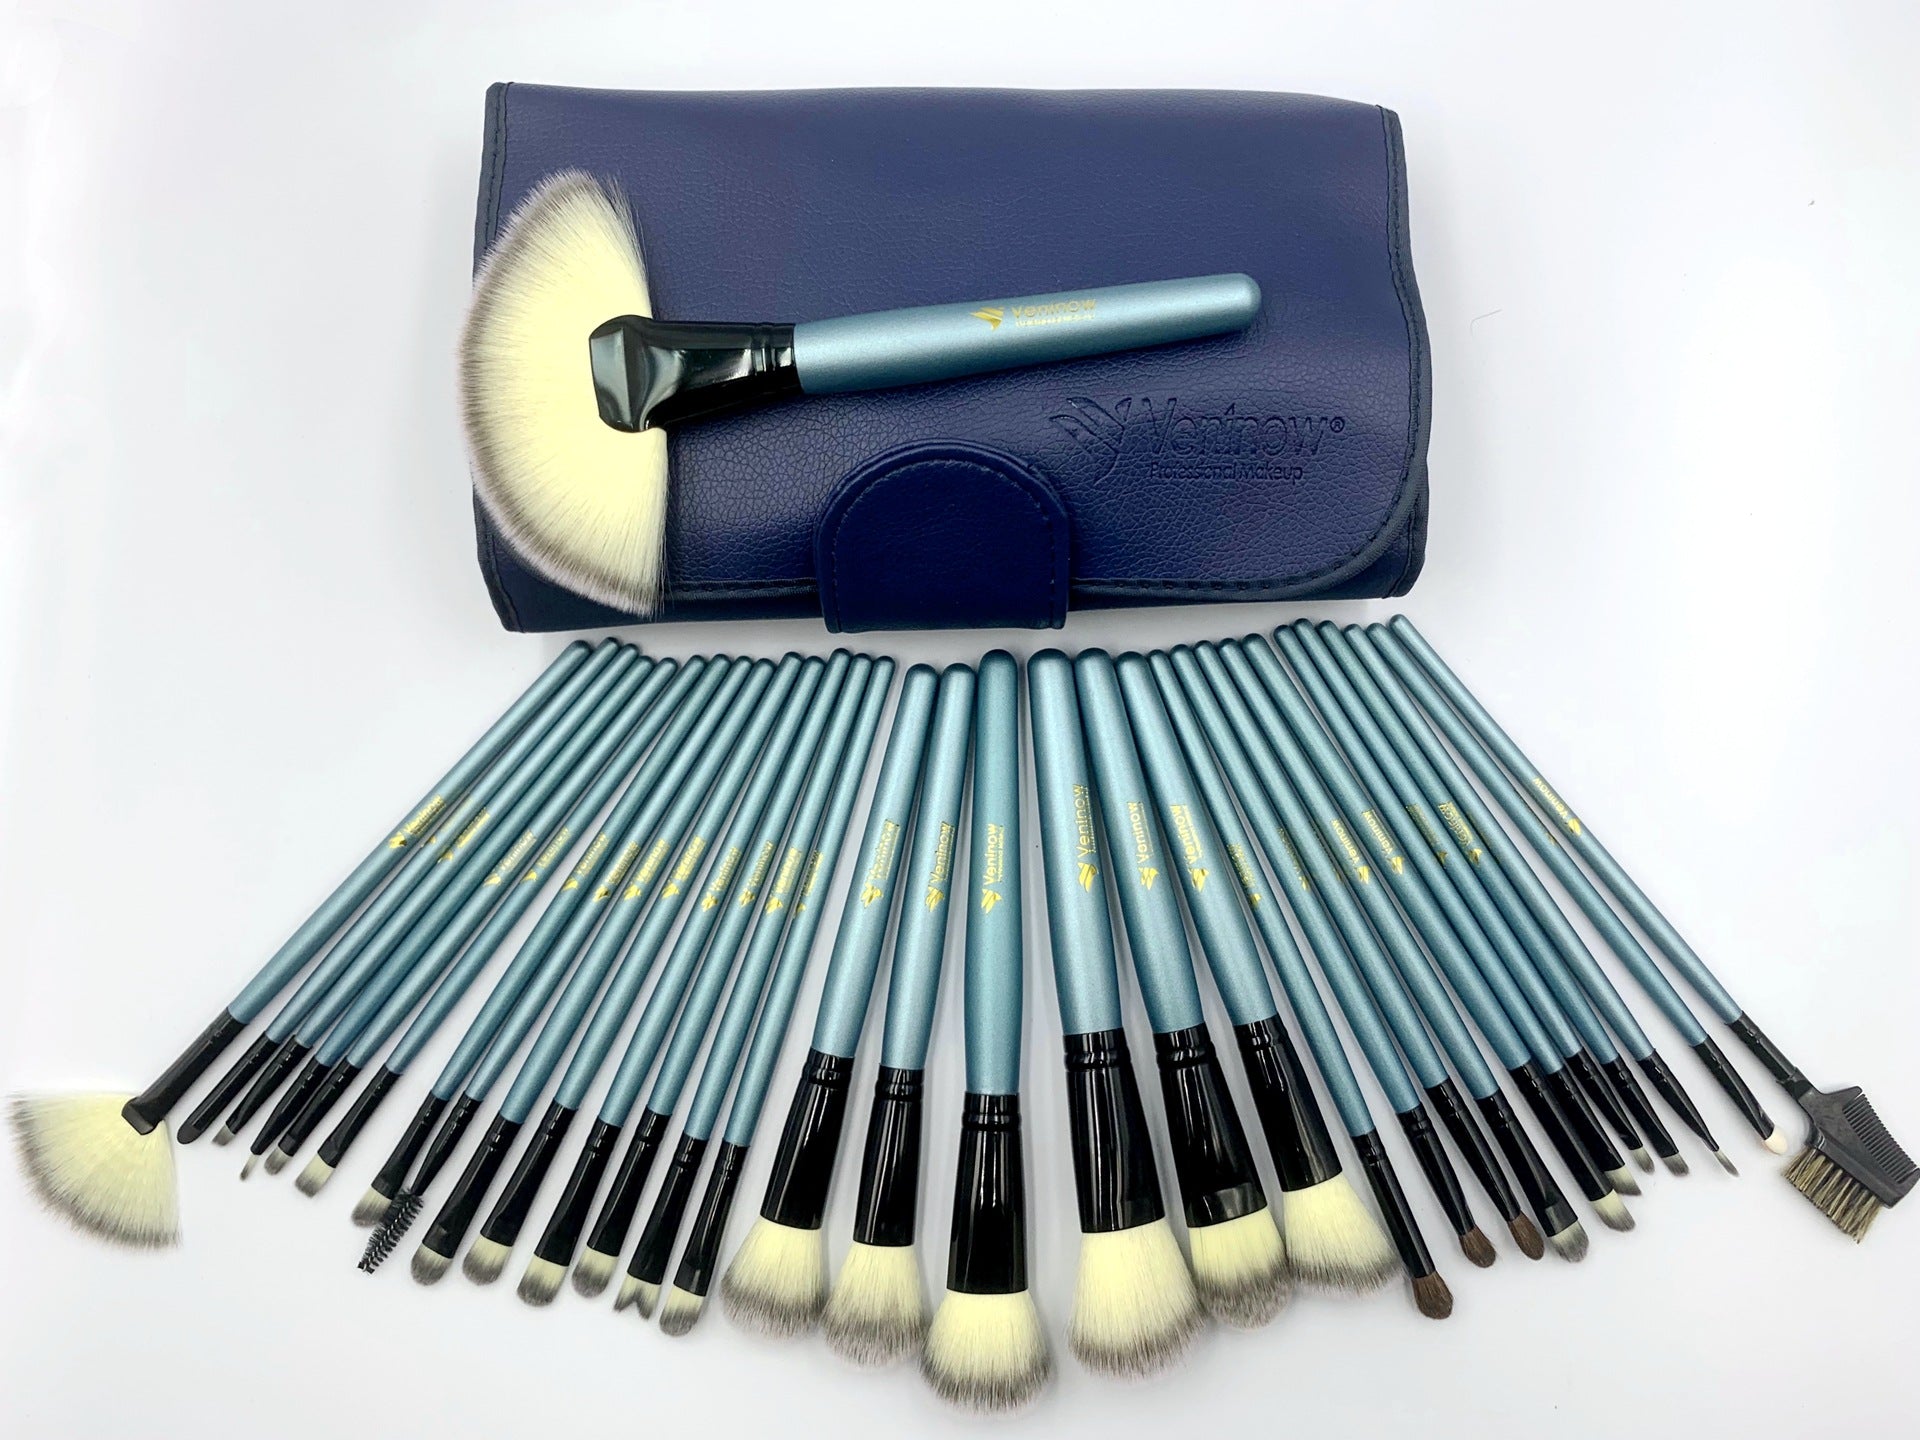 32 blue makeup brushes